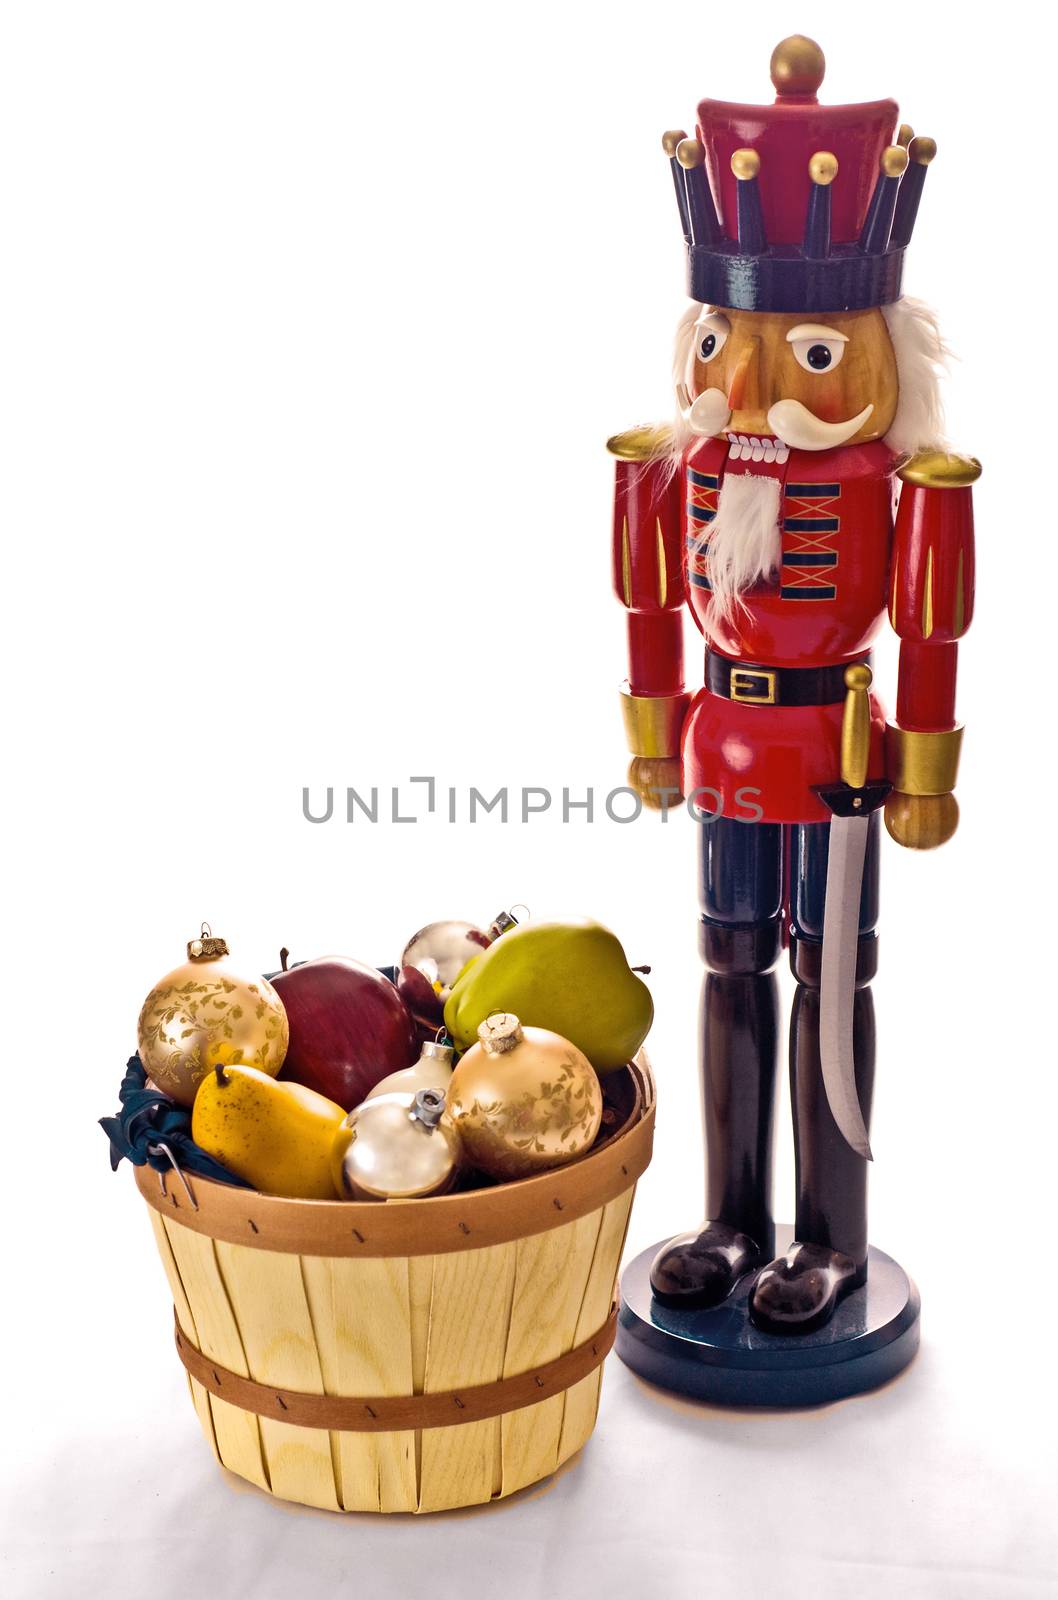 A nutcracker stands over a fruit basket